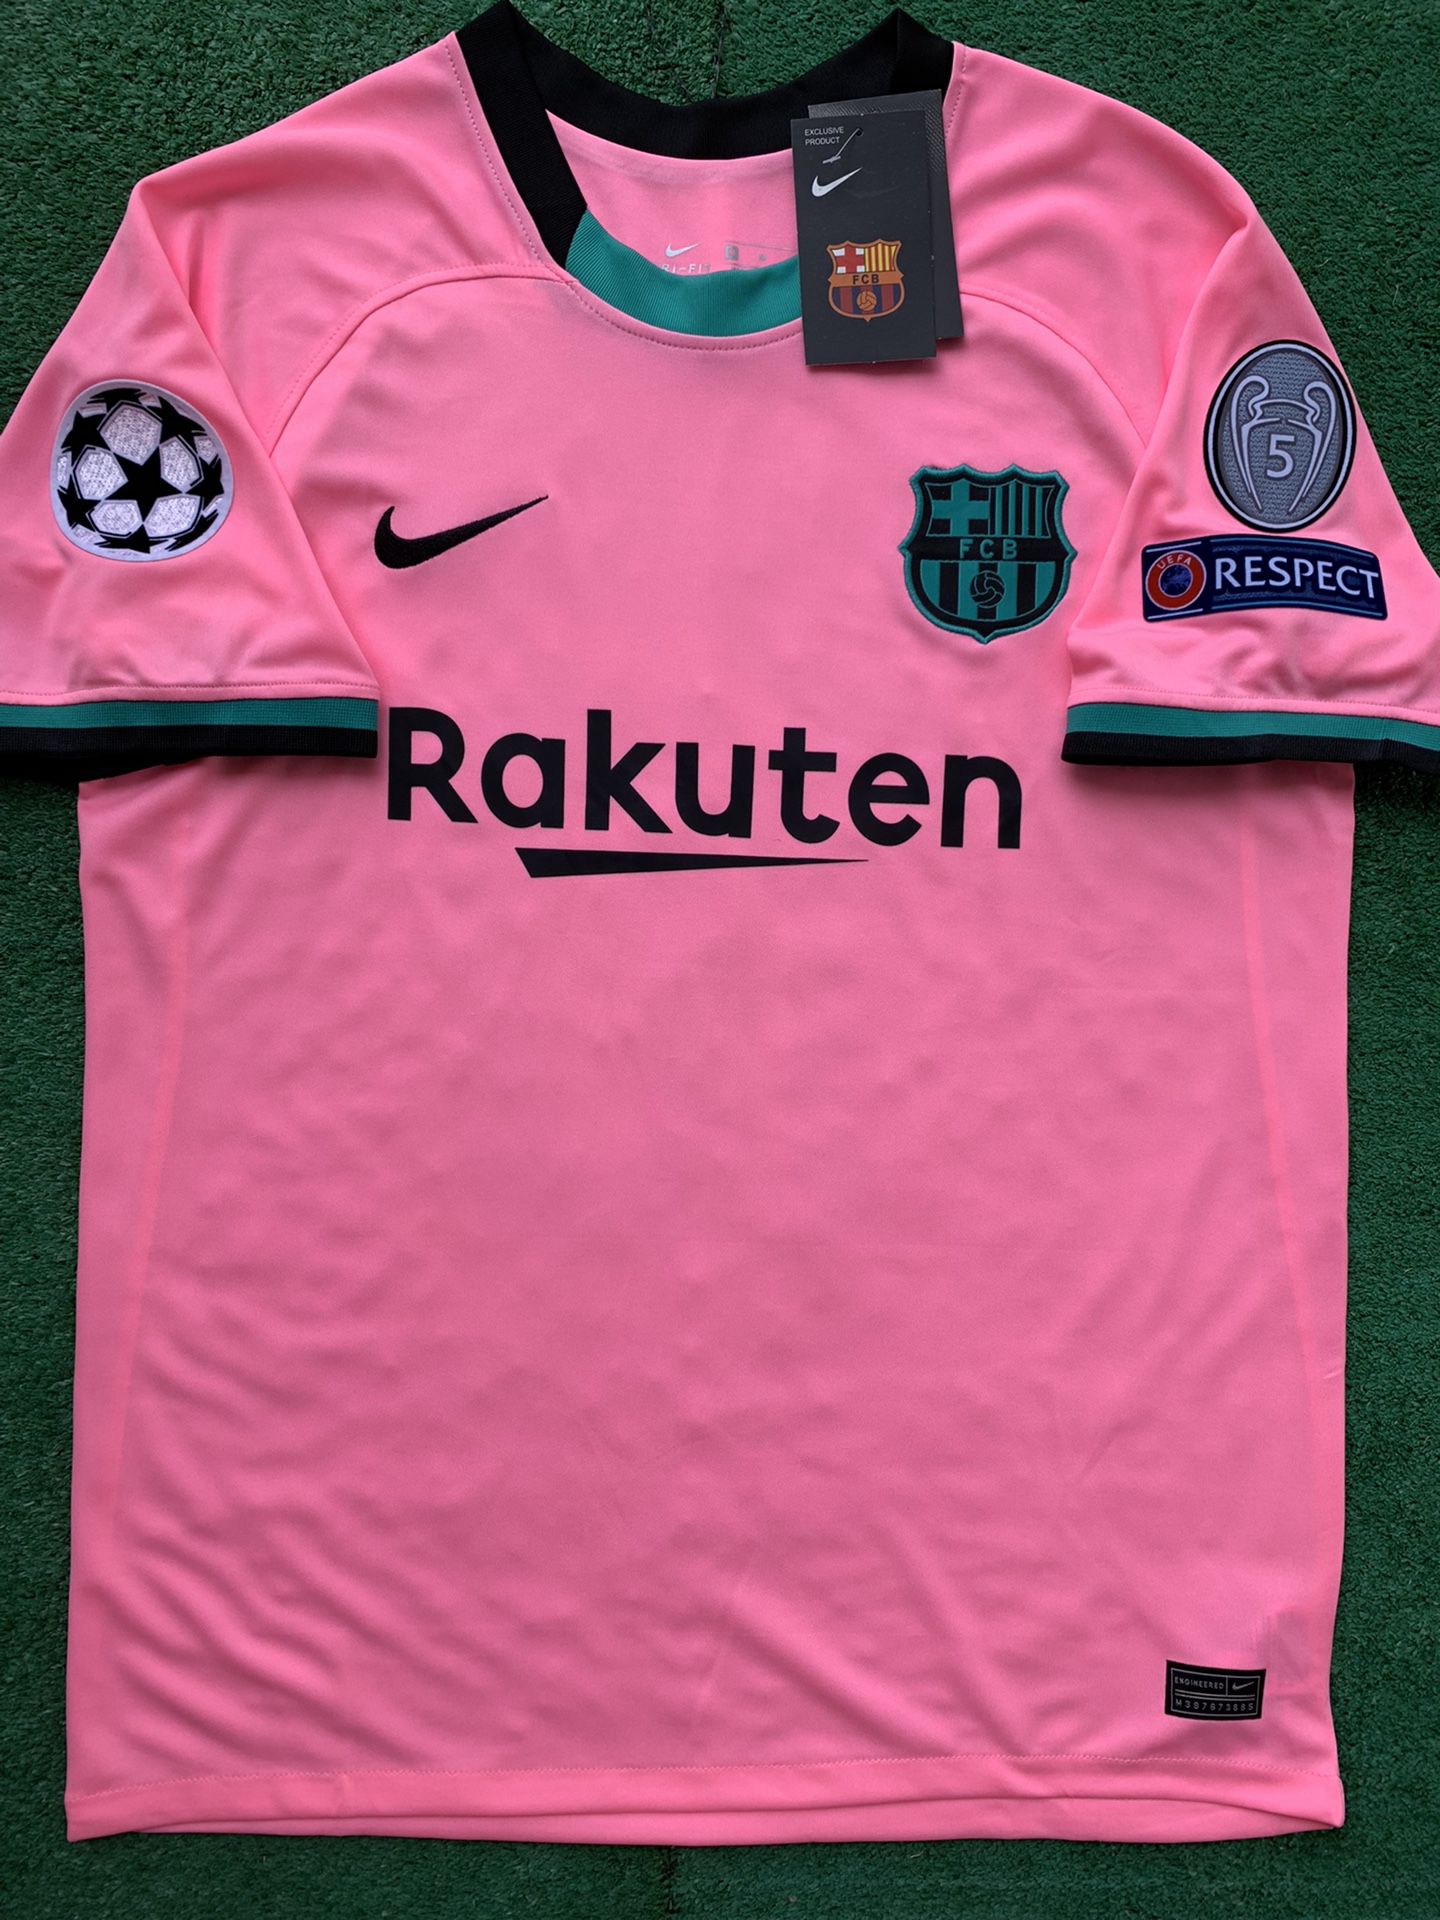 2020/21 Barcelona 3rd kit soccer jersey